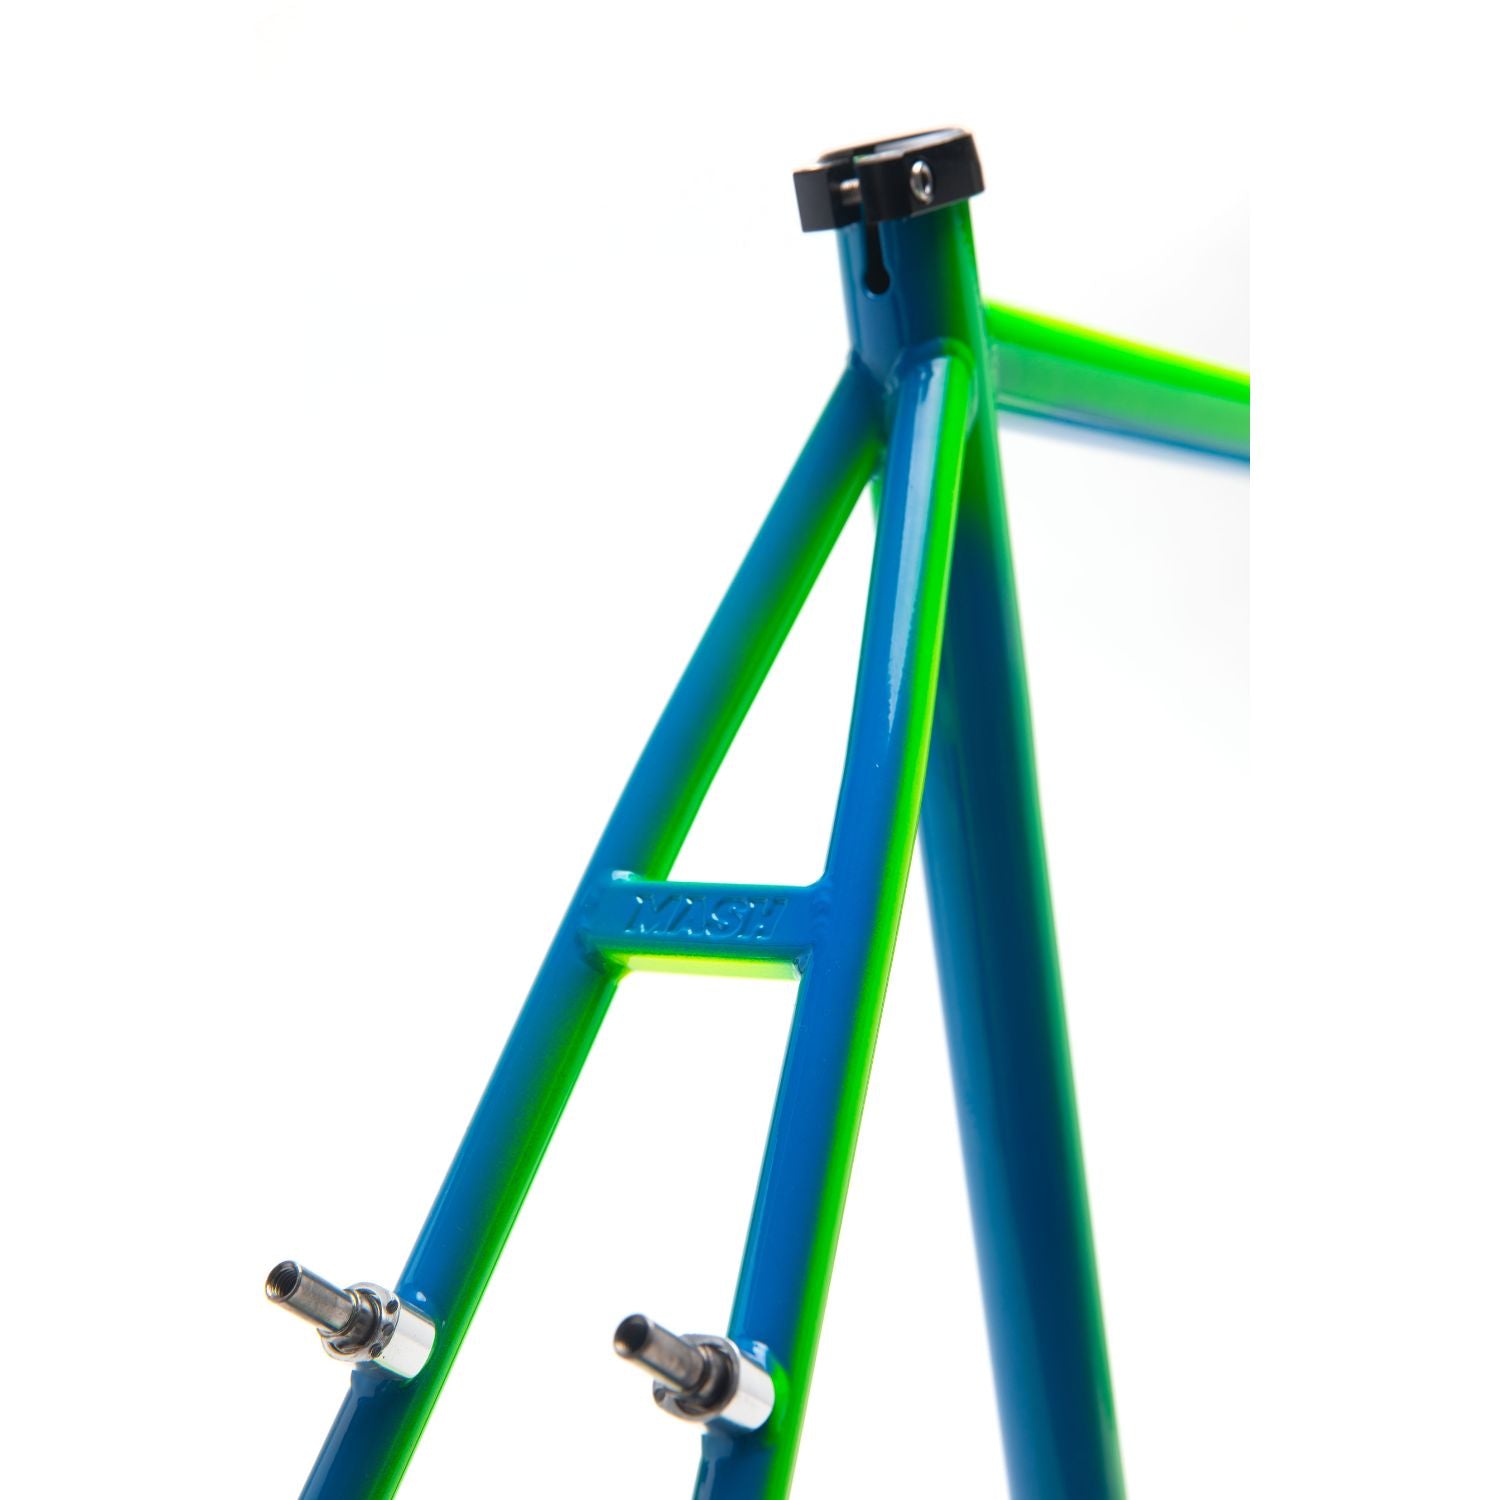 MASH Steel Frame Set 2024 (Neon Blue/Green Fade)